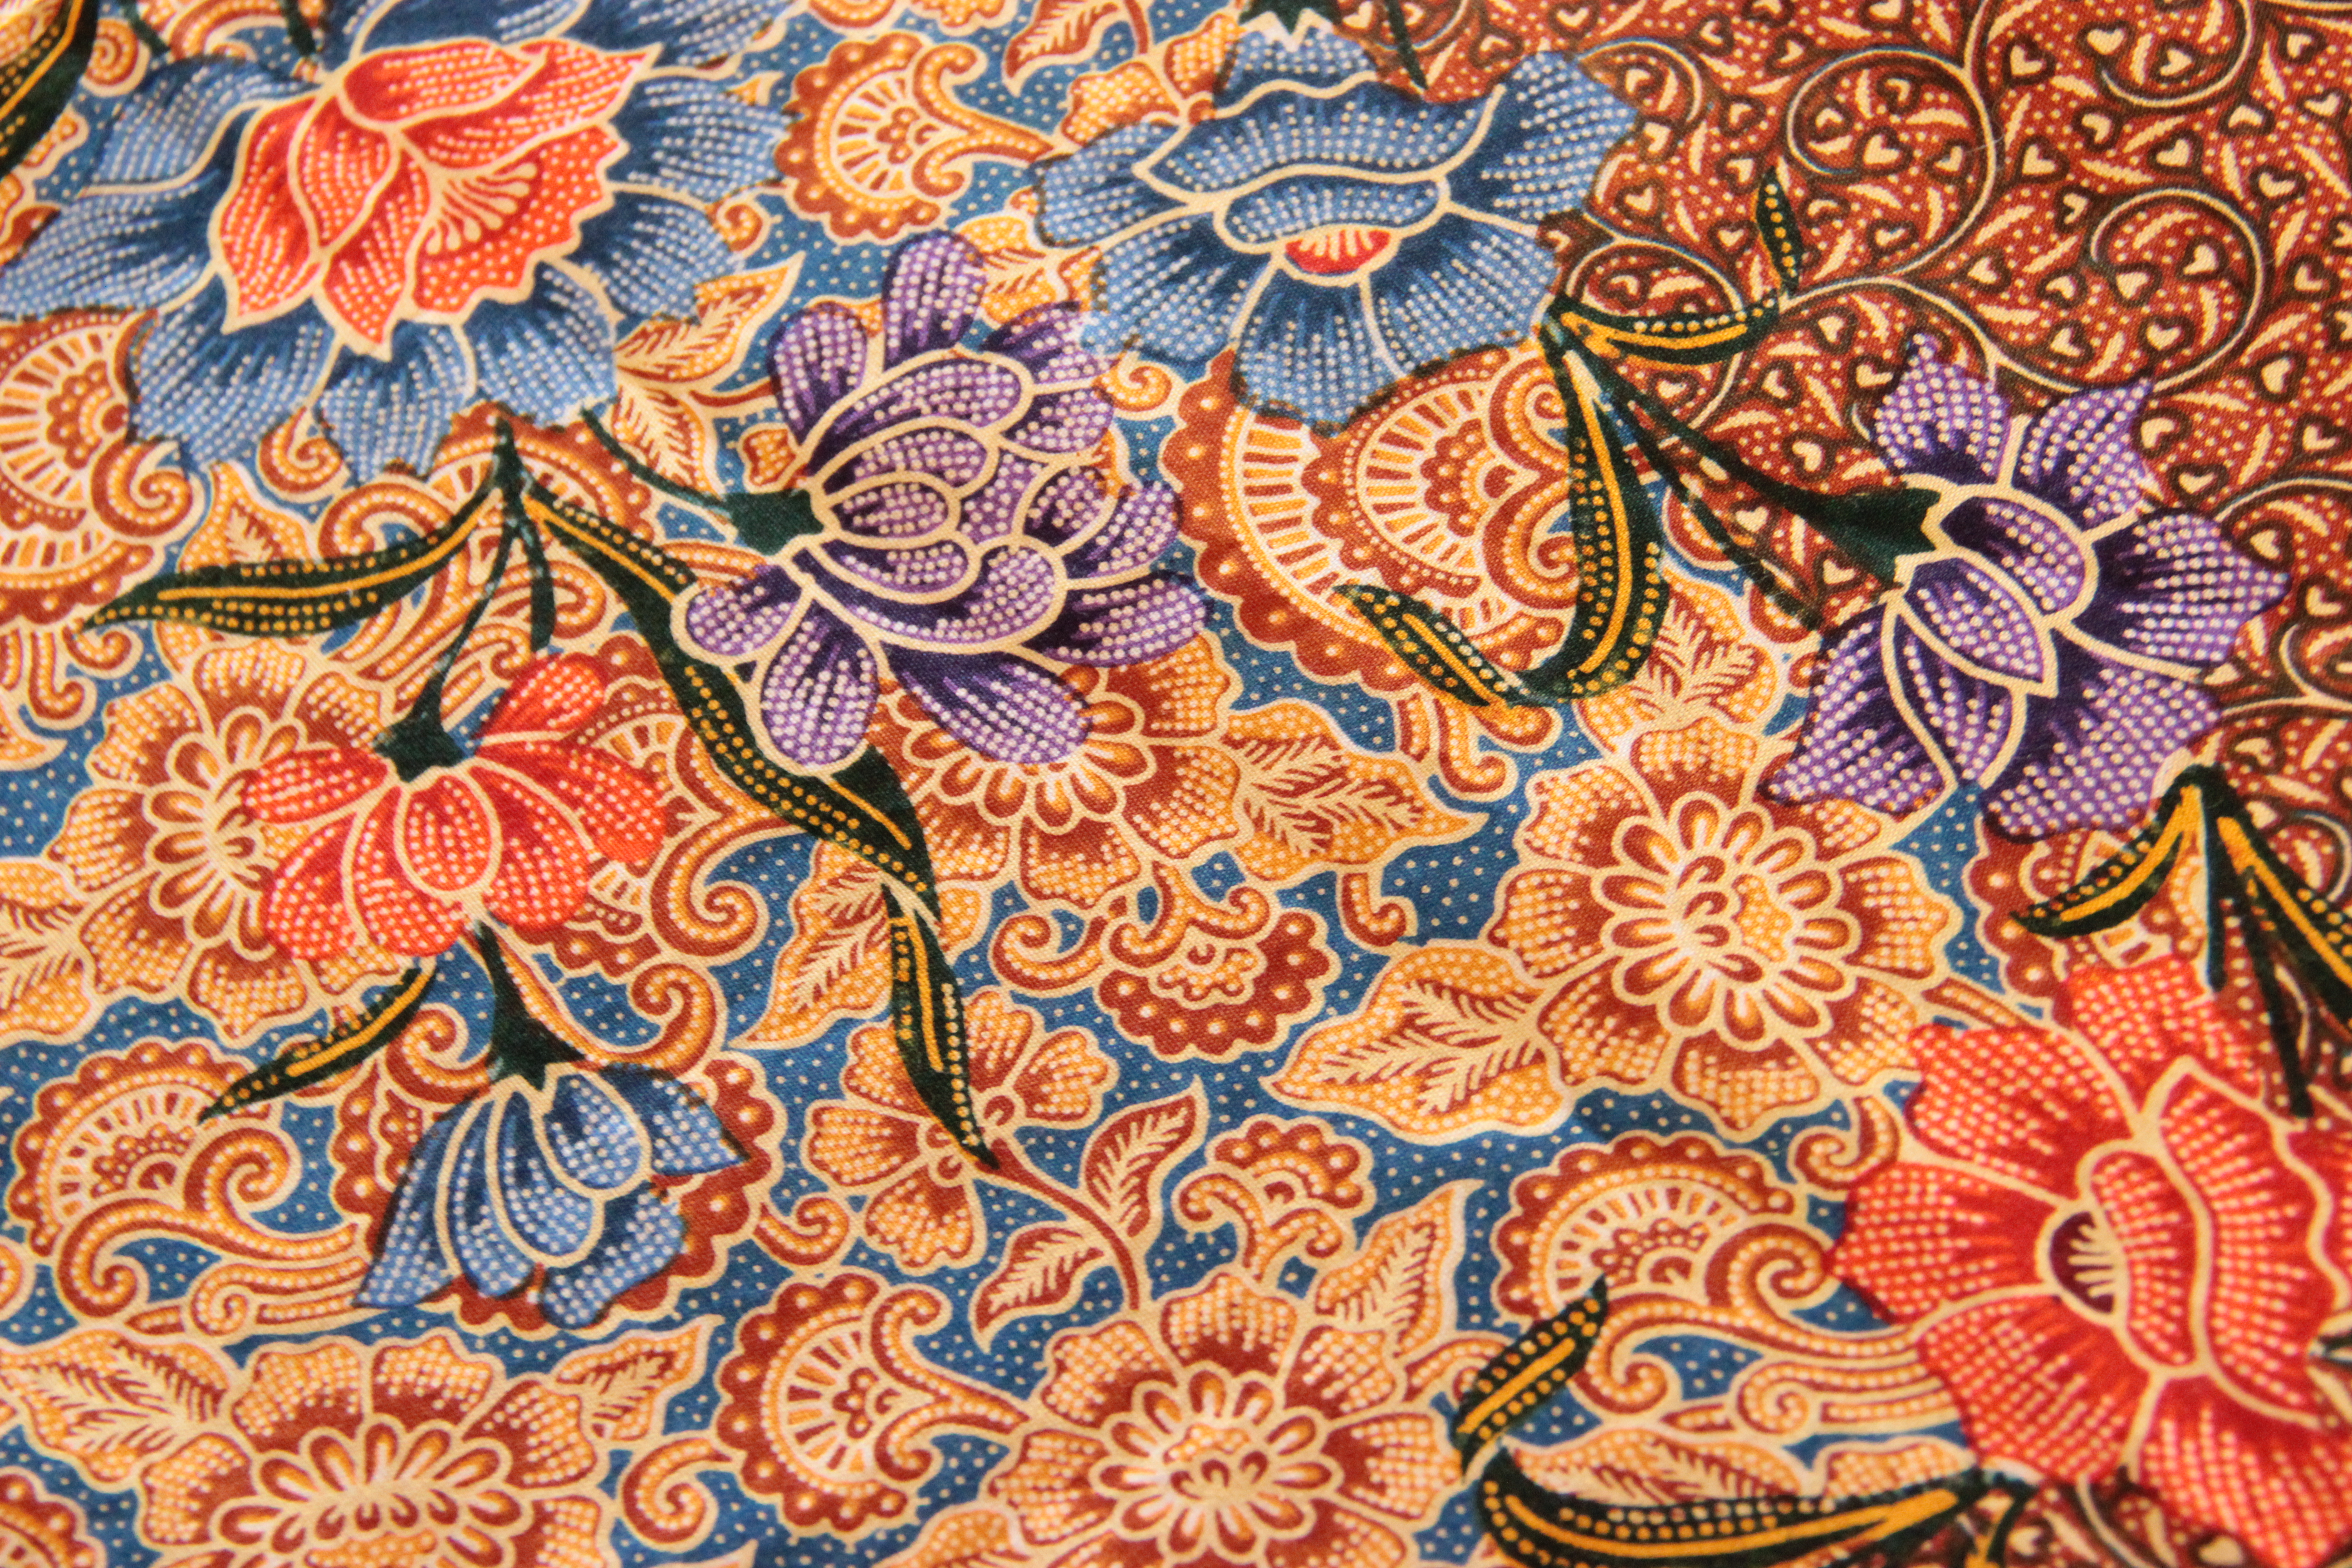  BATIK  on Pinterest Home Decor Colors Batik  Pattern and 